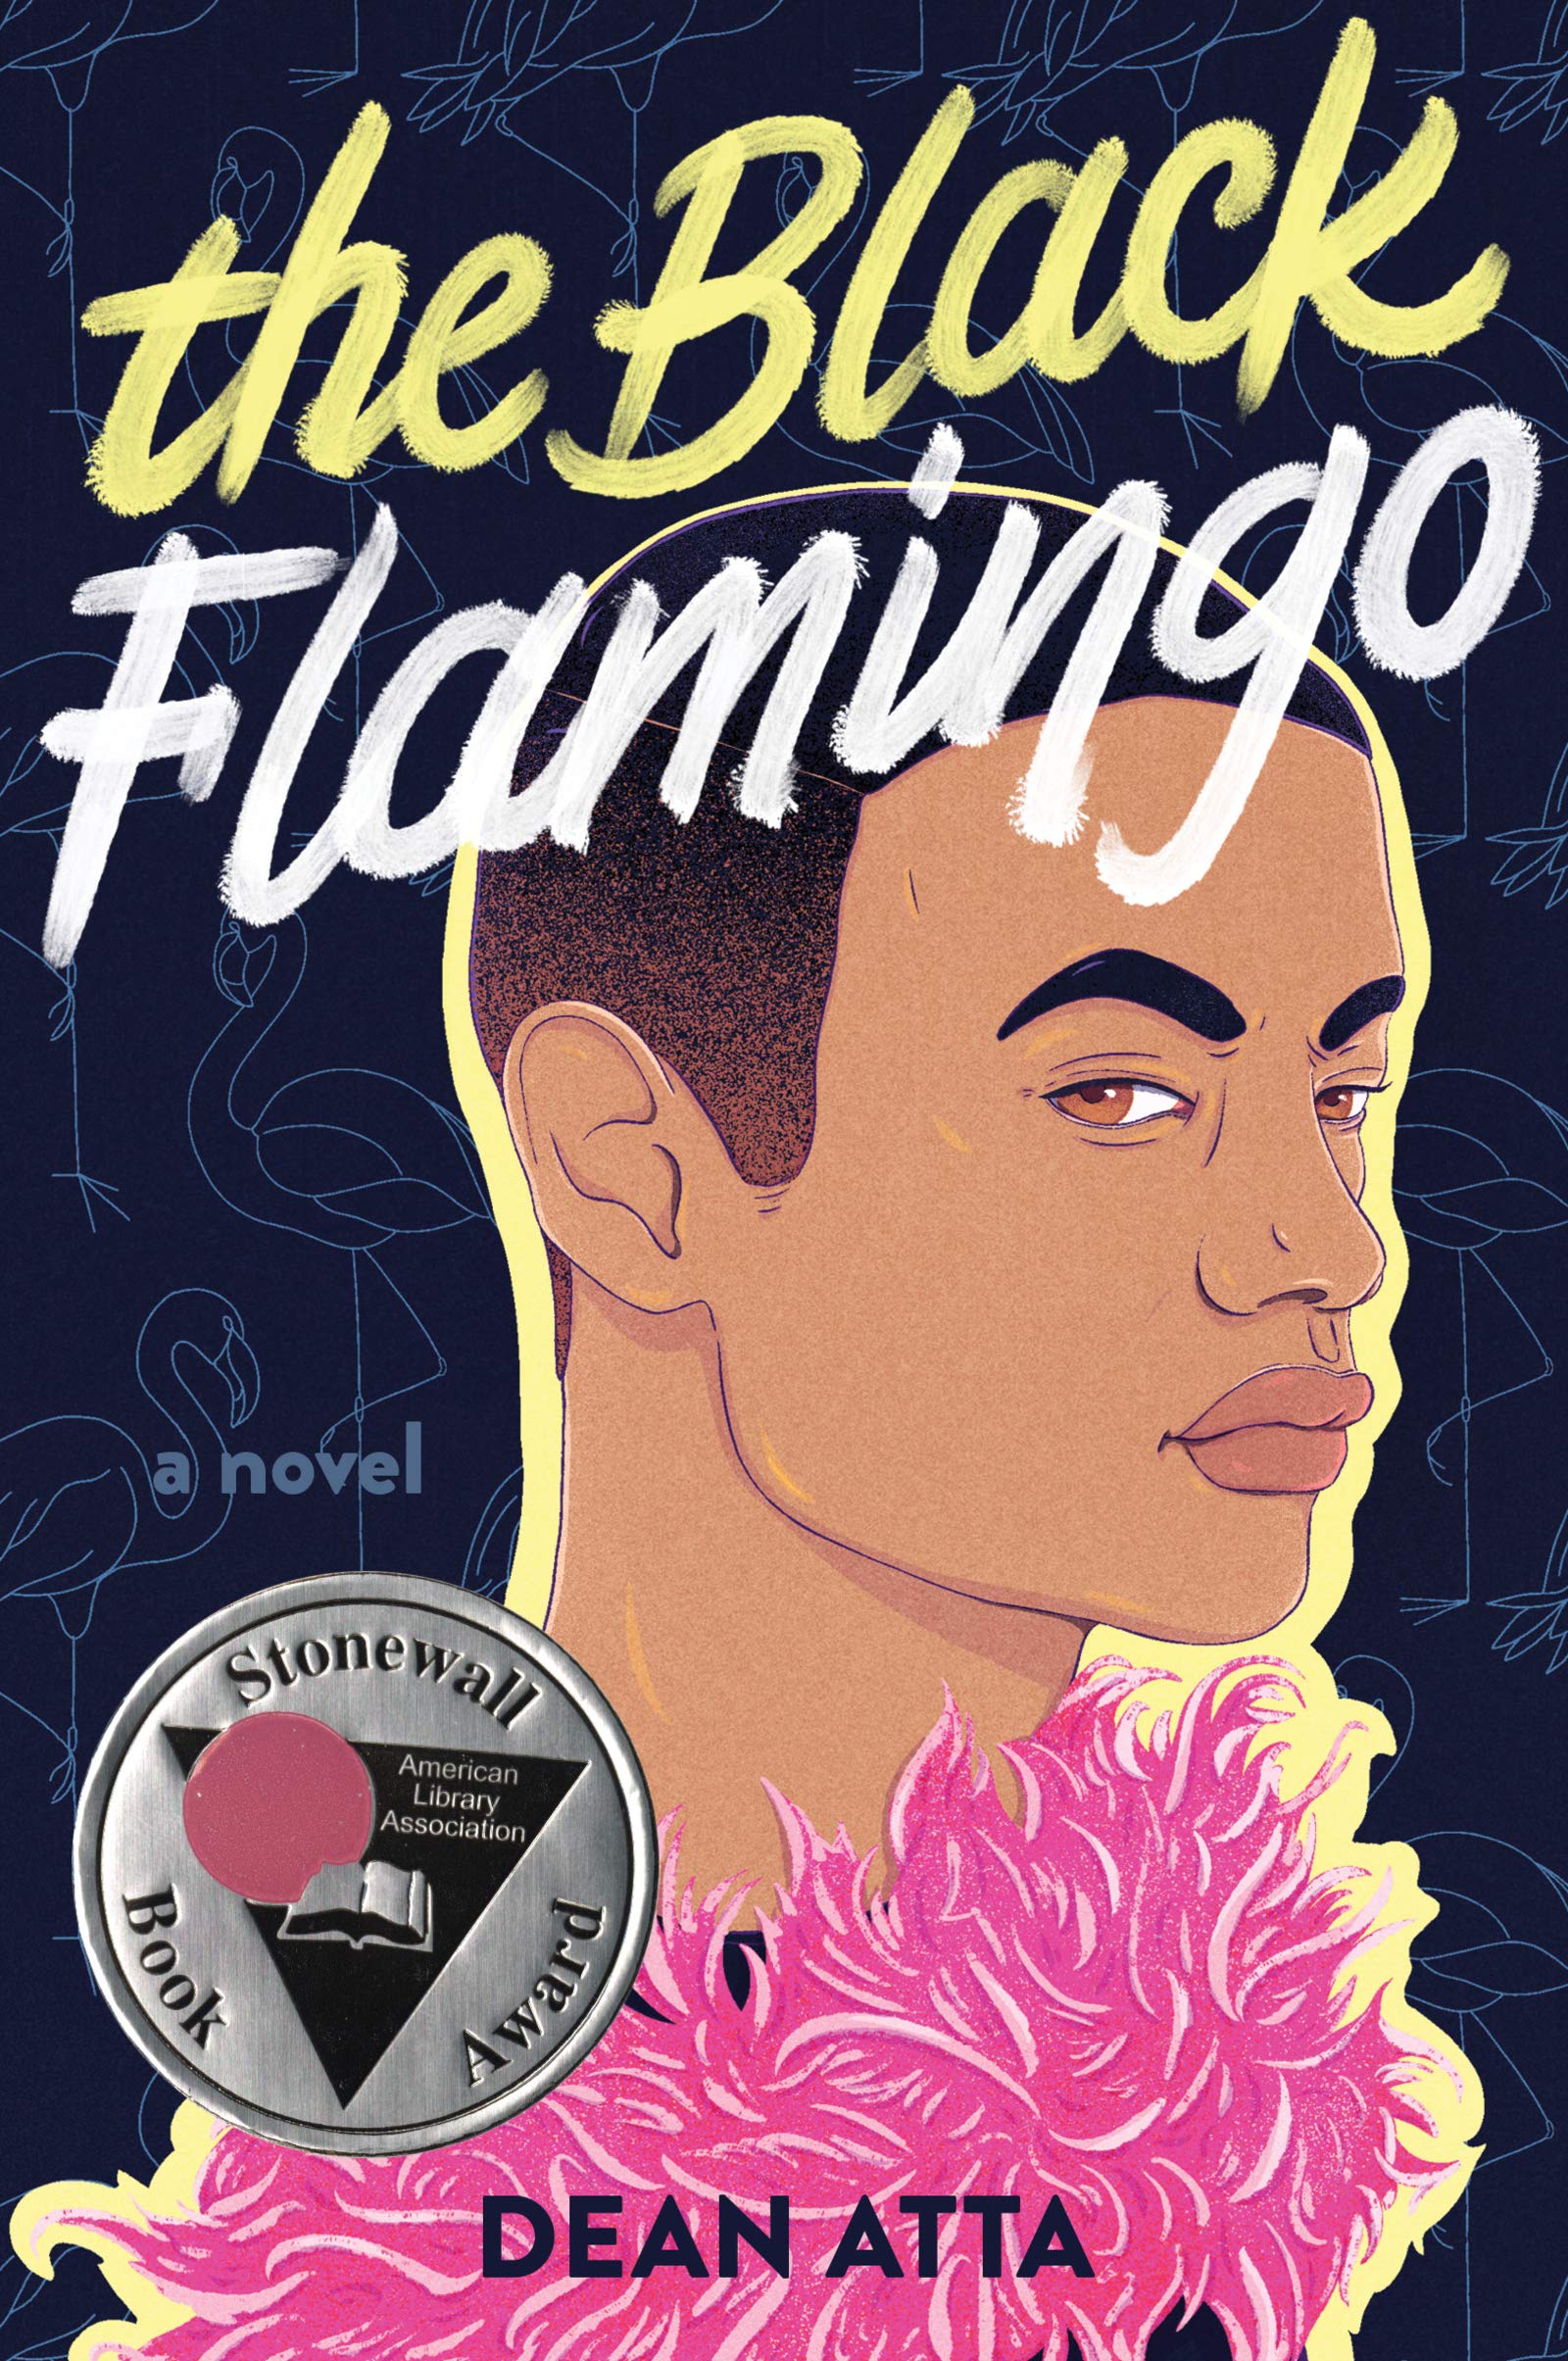 YA books with LGBTQ+ main characters: The Black Flamingo by Dean Atta